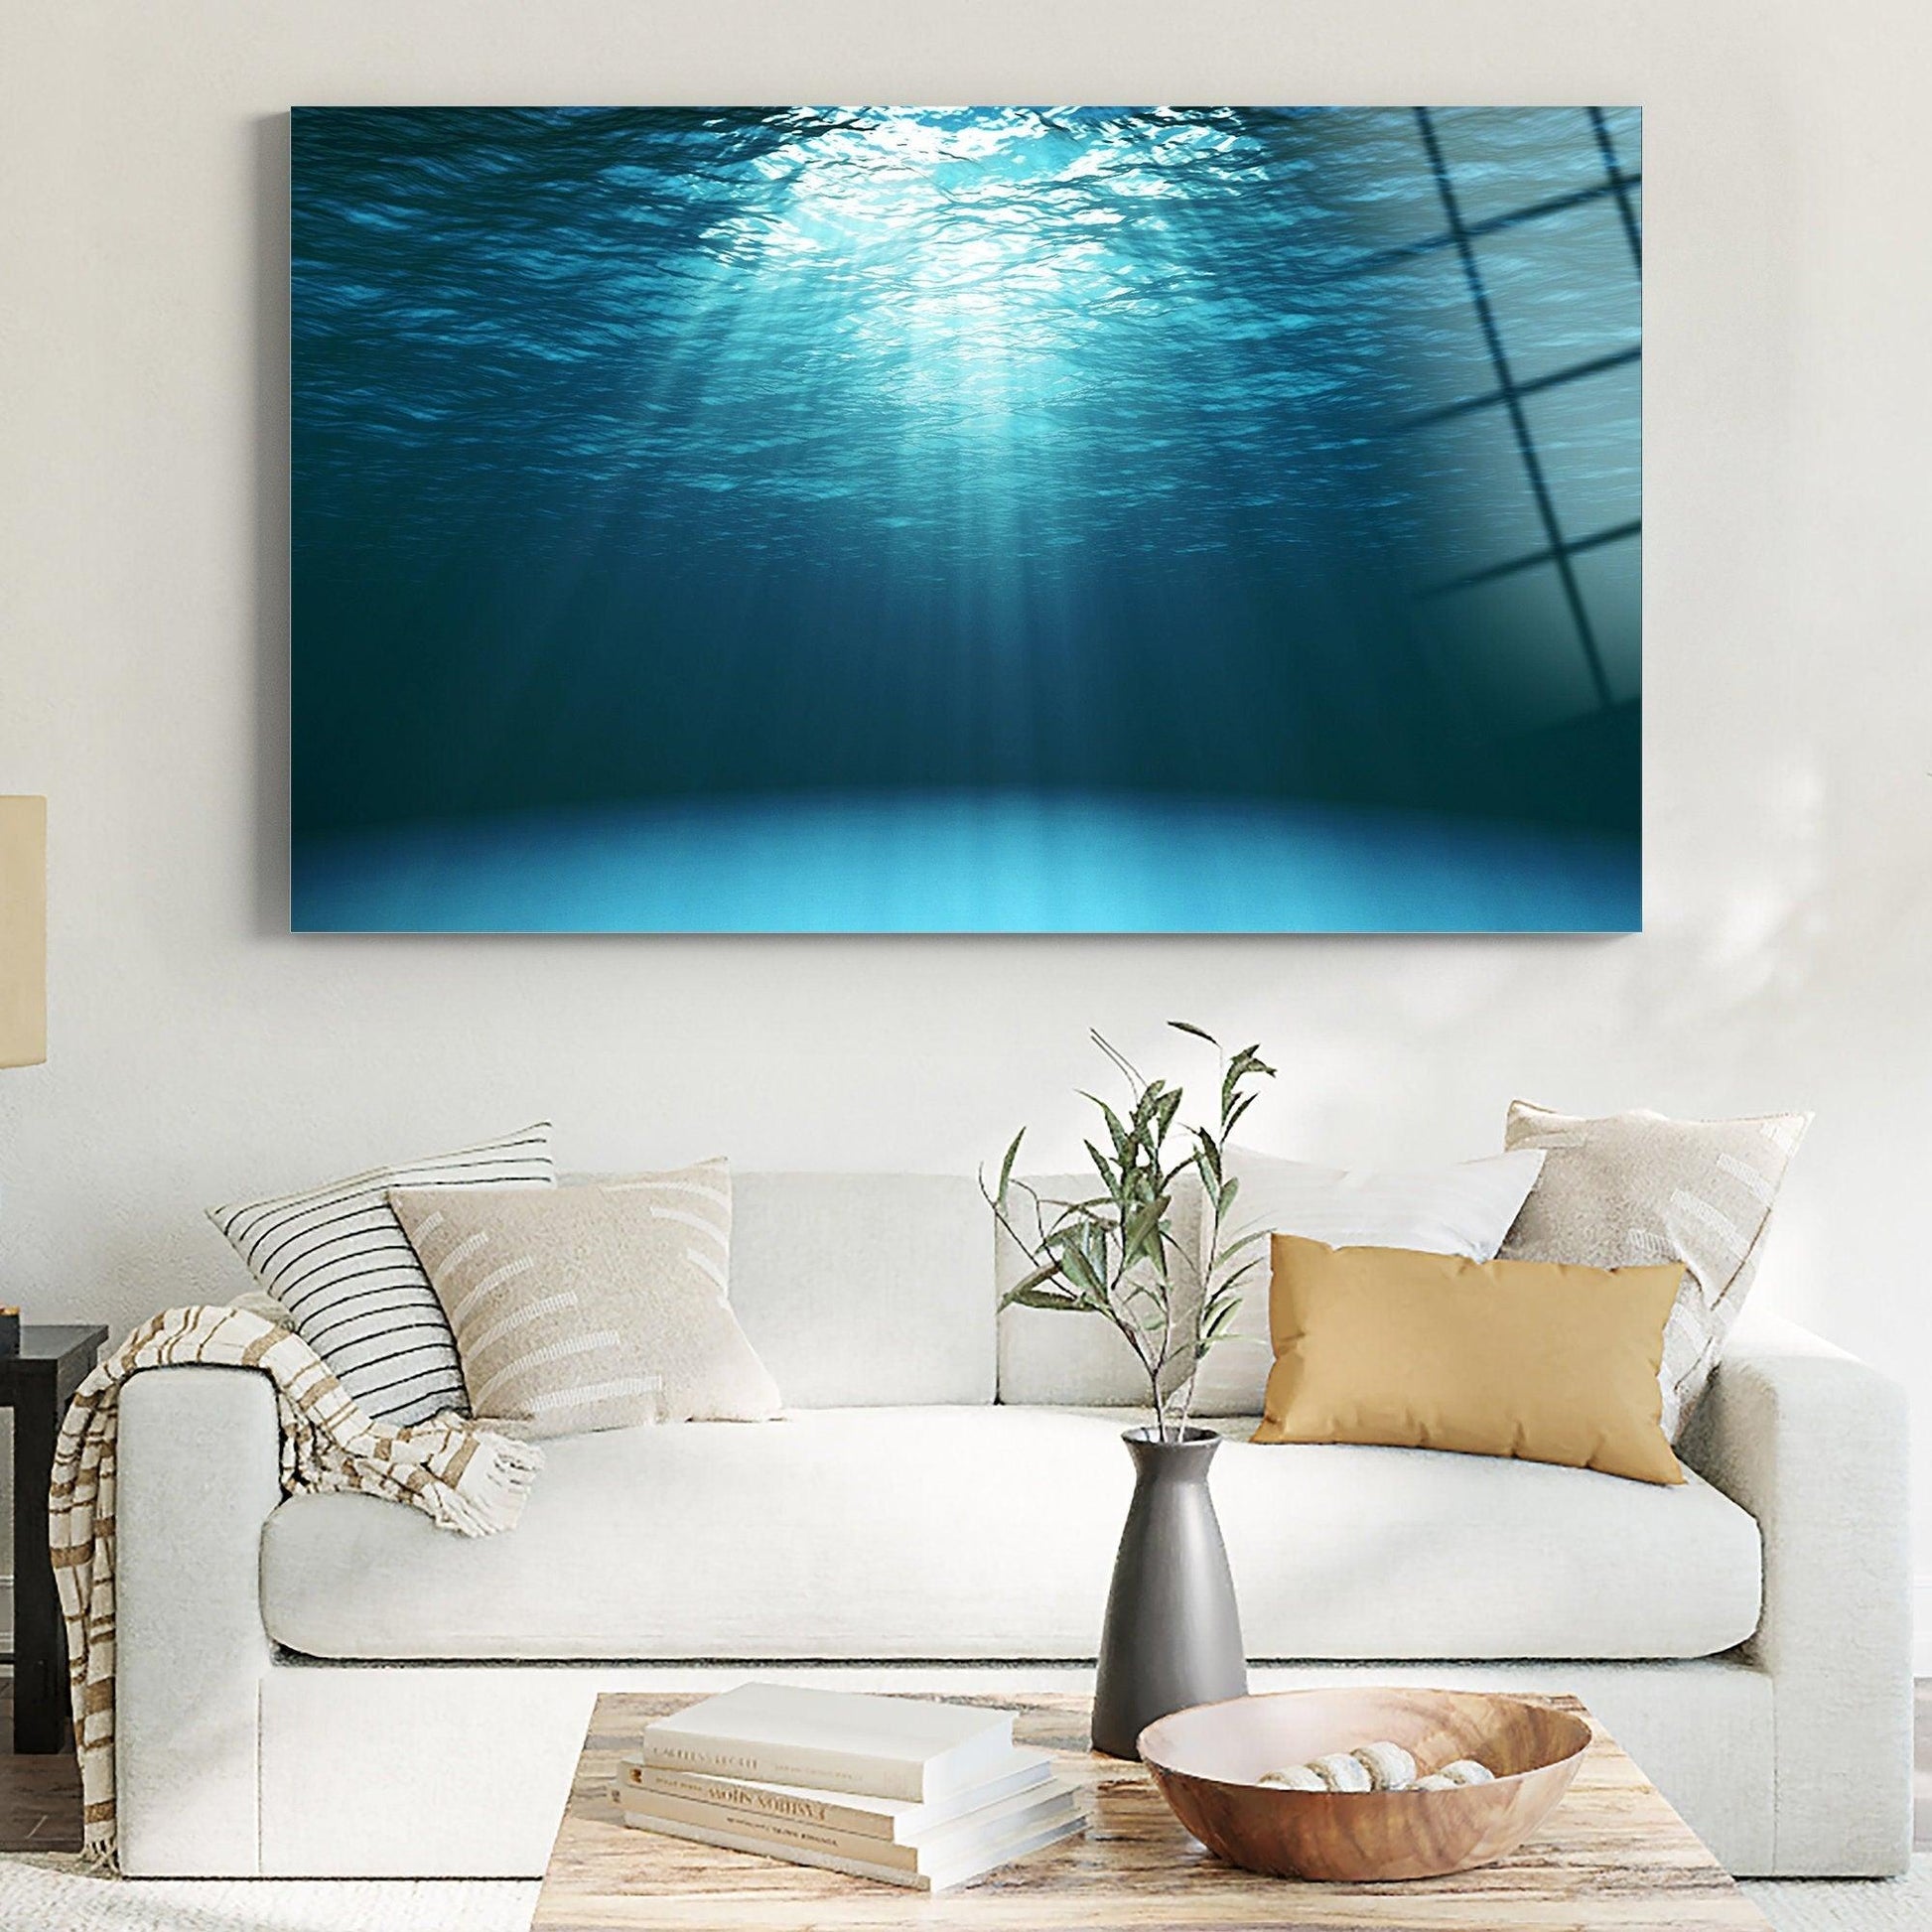 Under Underwater A Wall Underwater Canvas| print, Rays Water Sun glass